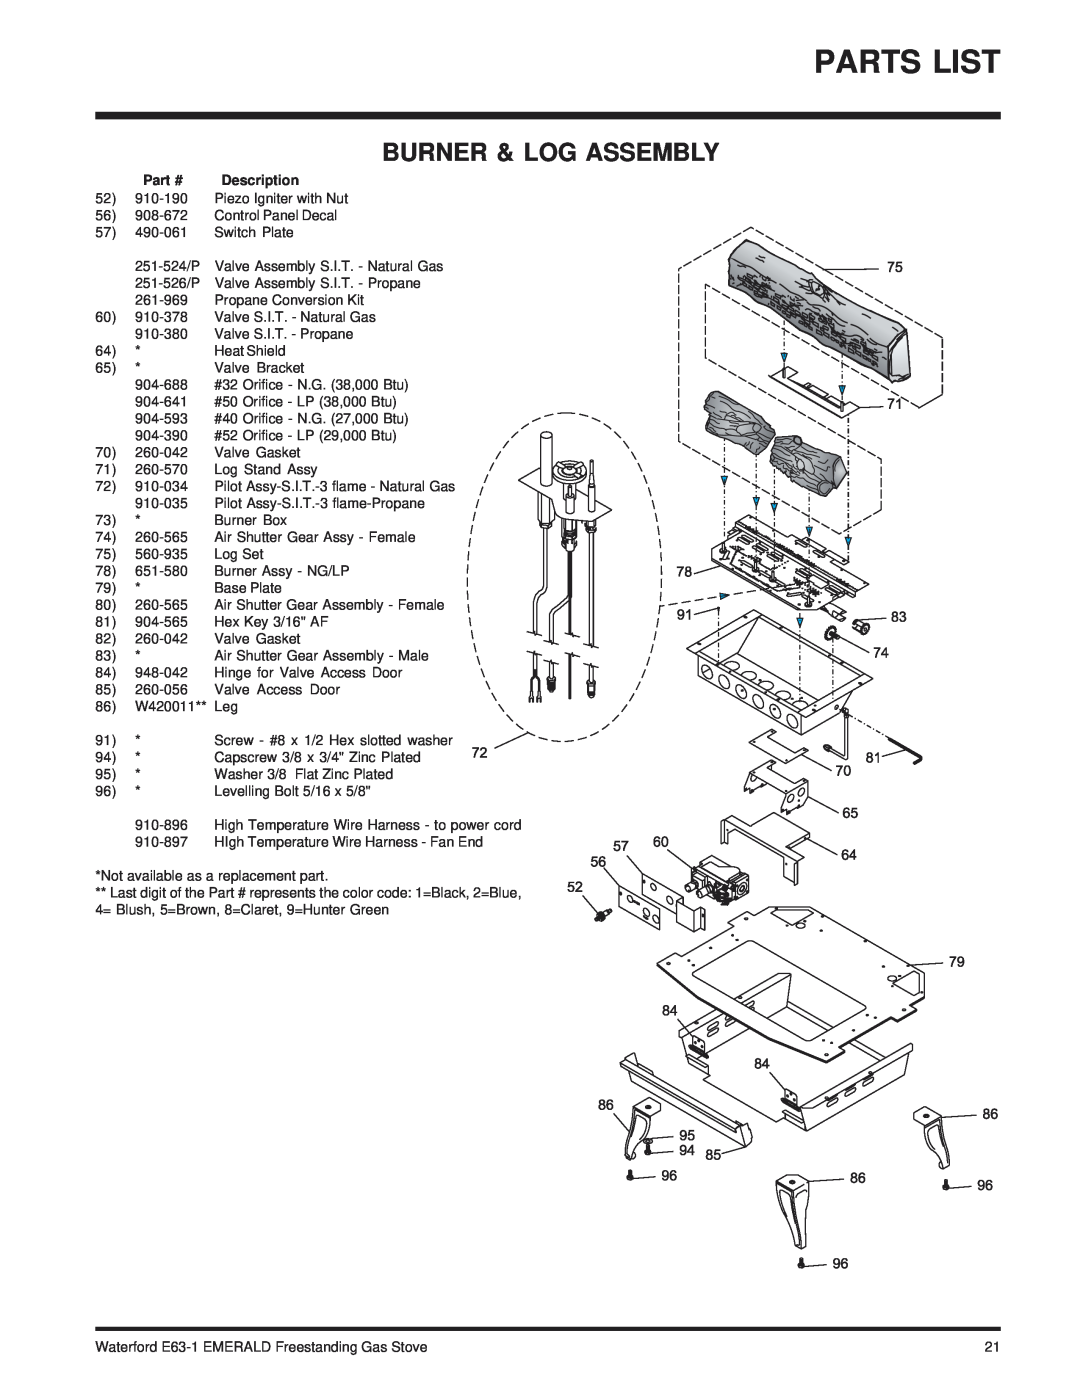 Waterford Appliances E63-NG1 installation manual Burner & Log Assembly 